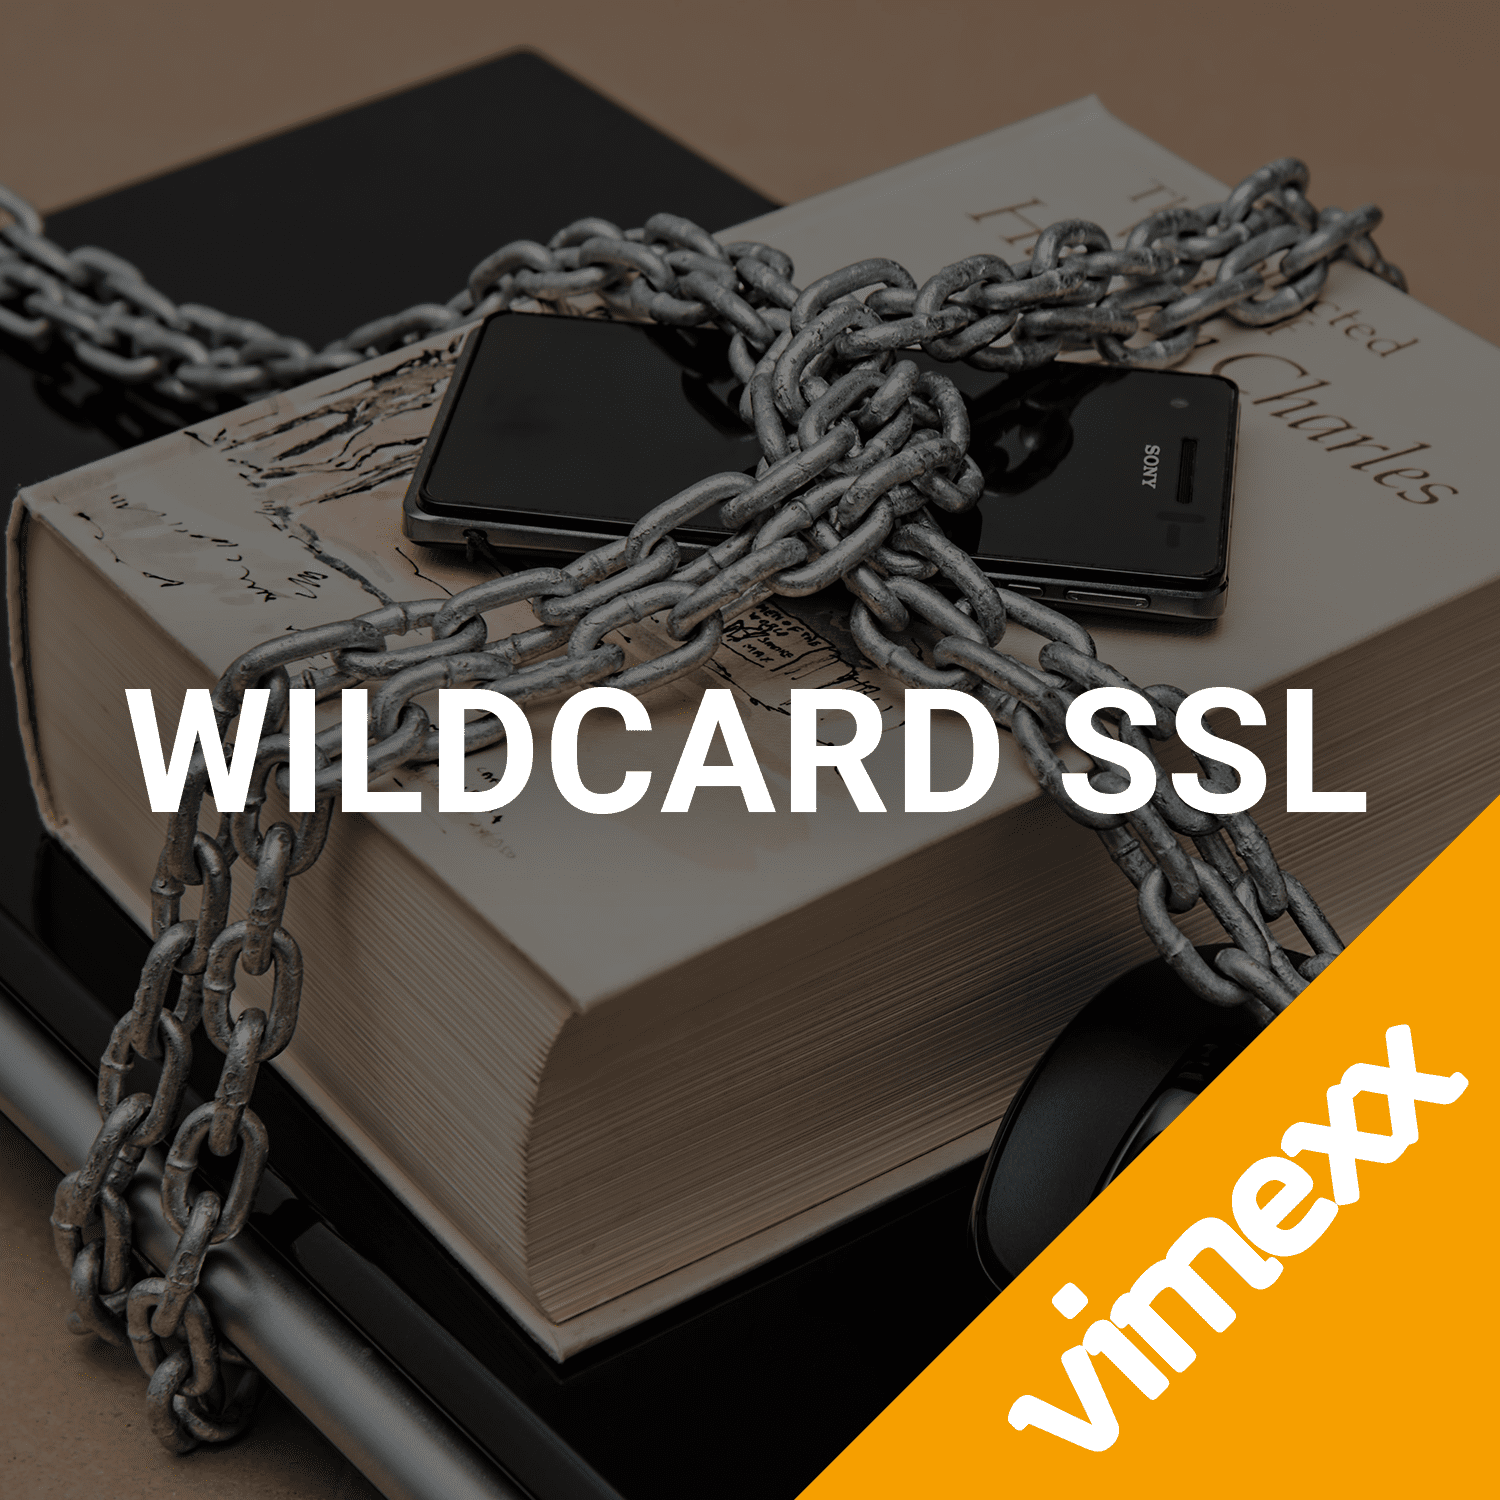 Wildcard SSL lets encrypt